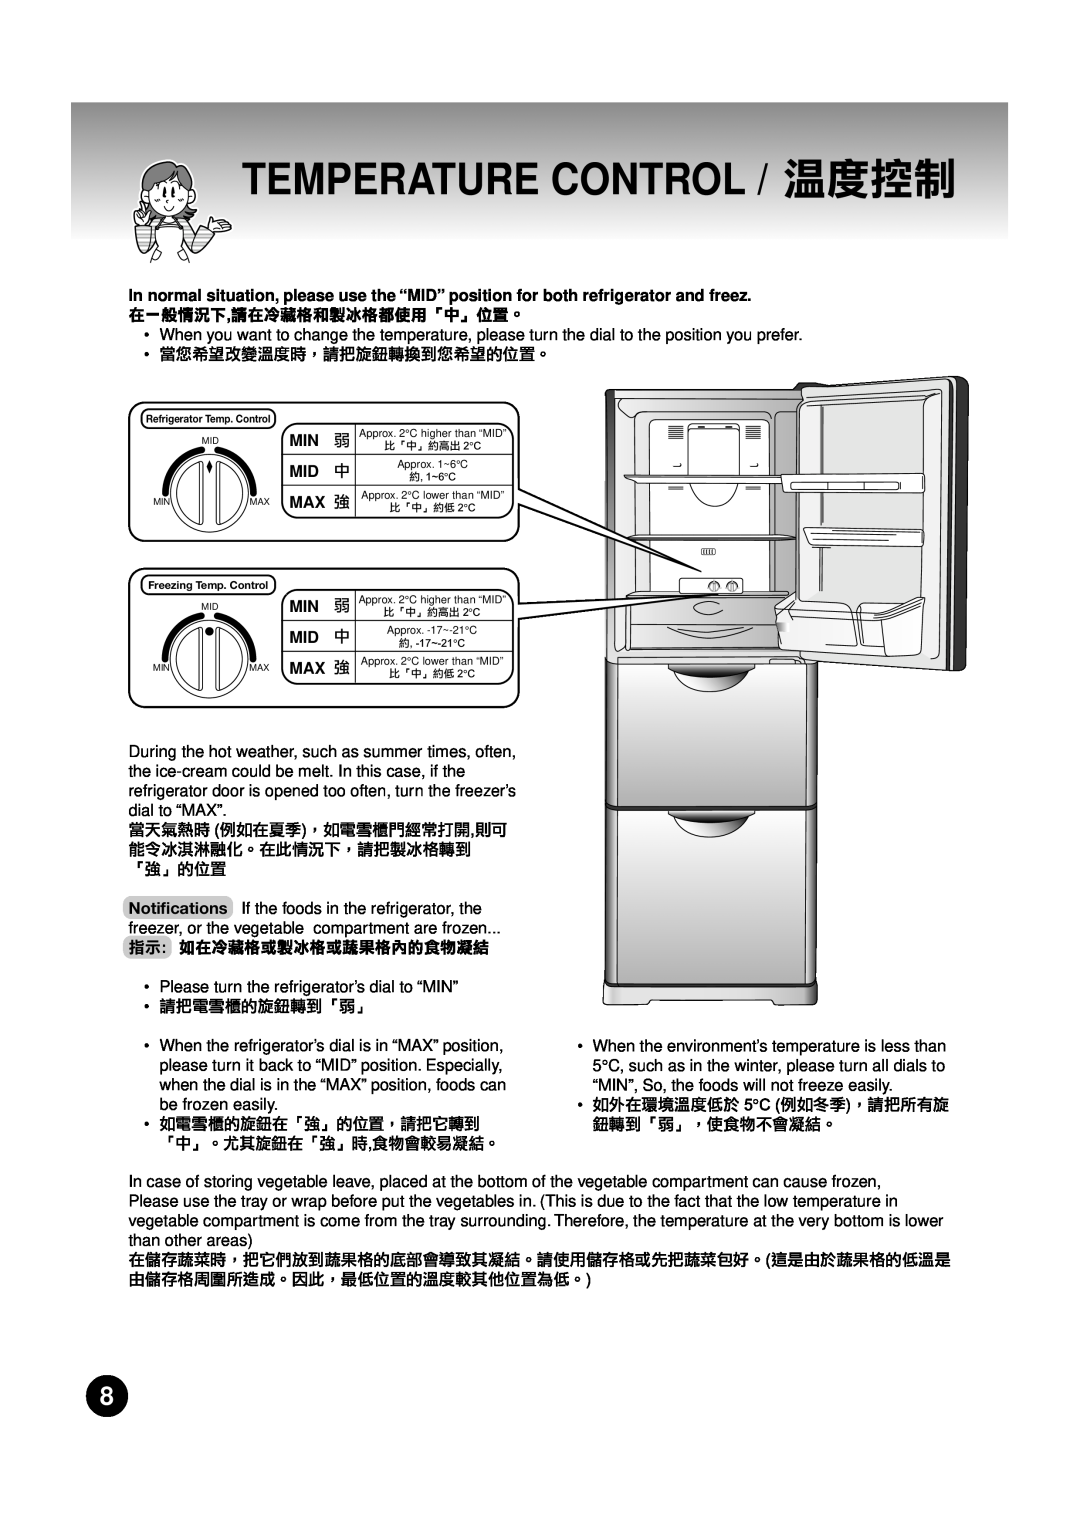 Hitachi R-26SVND-1, R-26SVG, R-26SVH operation manual Max 強, Temperature Control / 溫度控制 